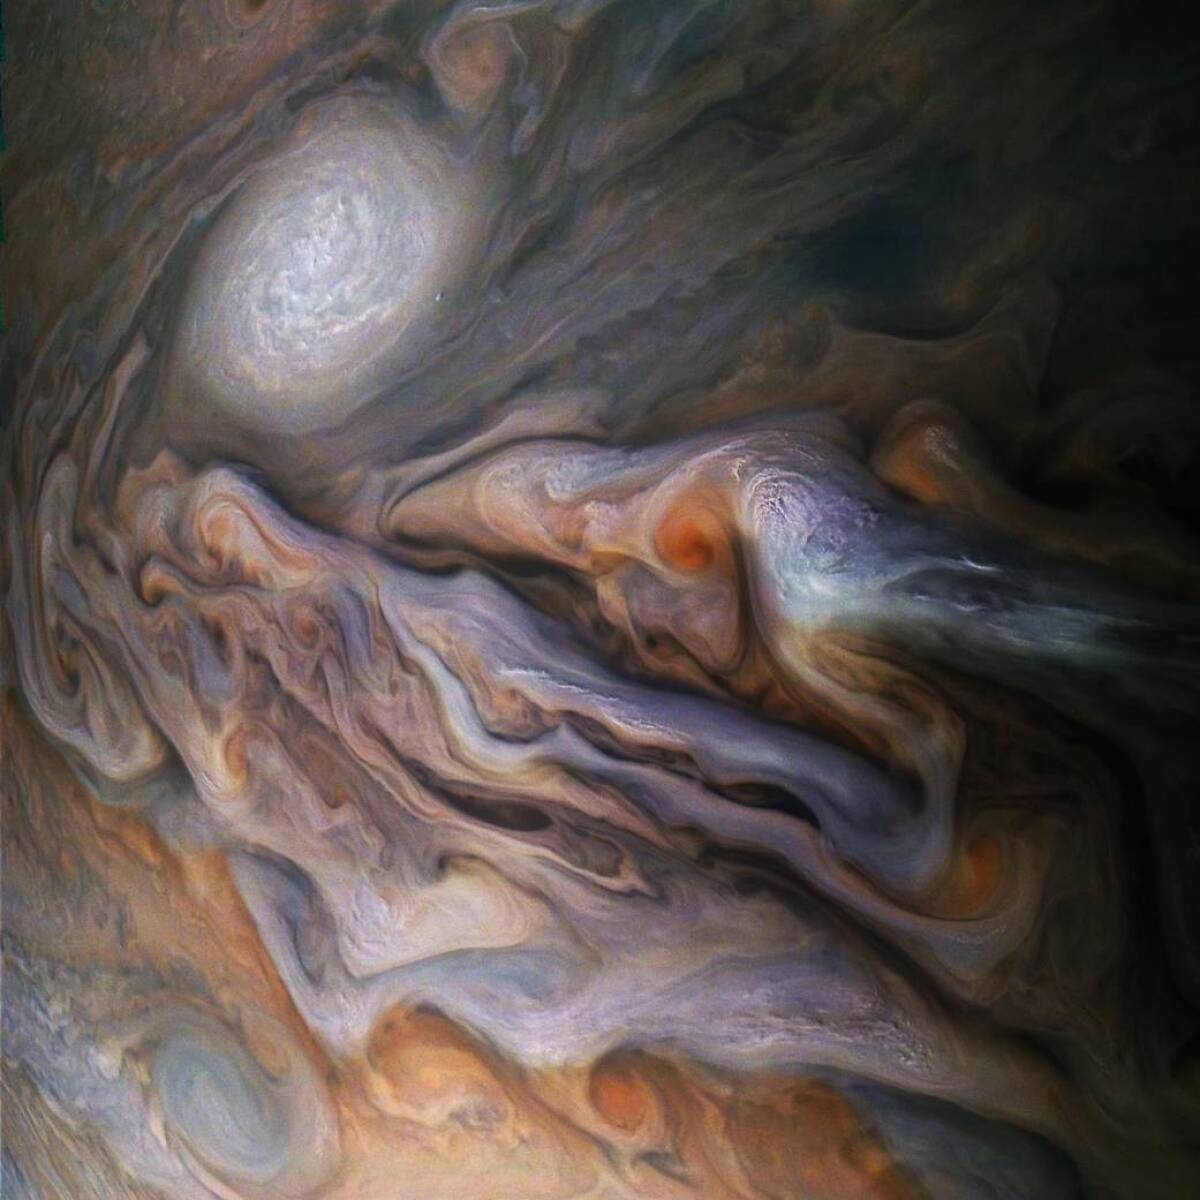 NASA's tiny, solar-powered spacecraft Juno took images of massive cyclones at Jupiter's poles.